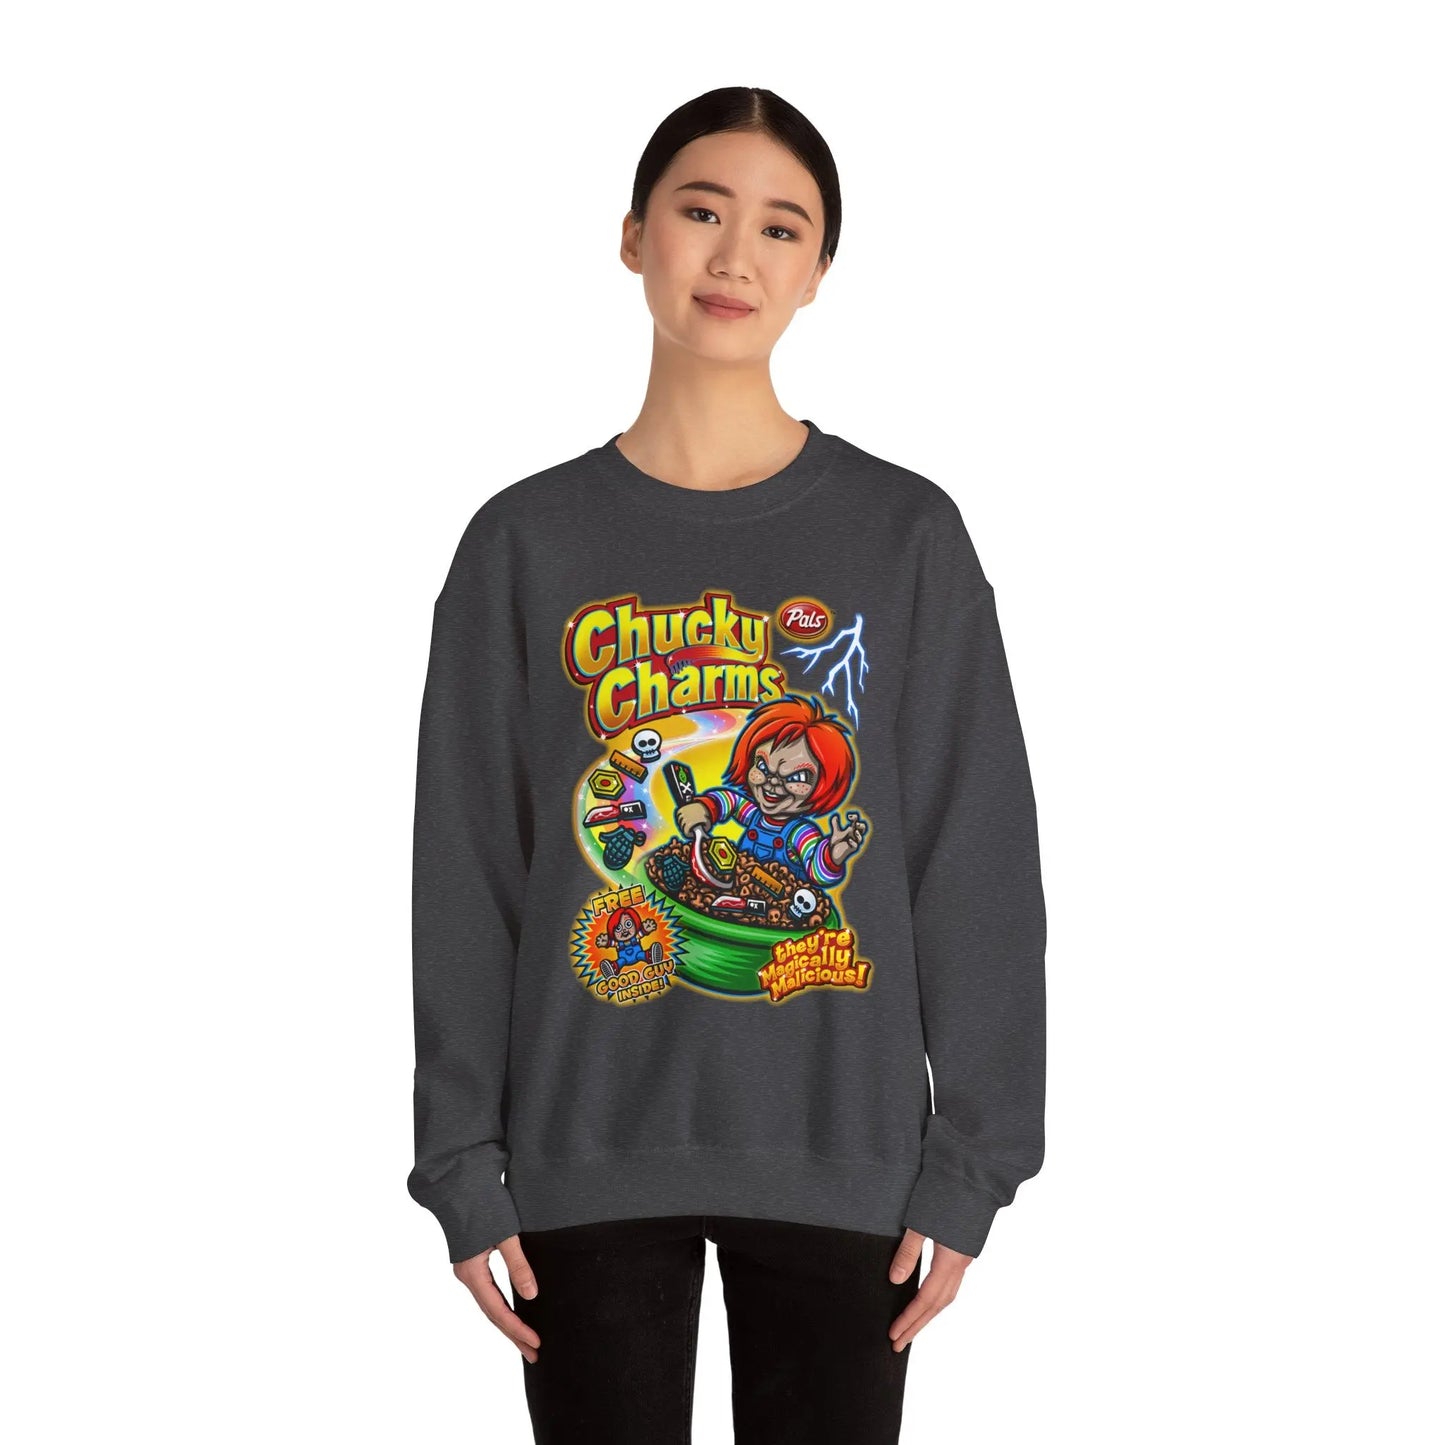 Retro Chucky Charms' Child's Play Halloween Sweatshirt 2024 Horror Movie Character Vintage